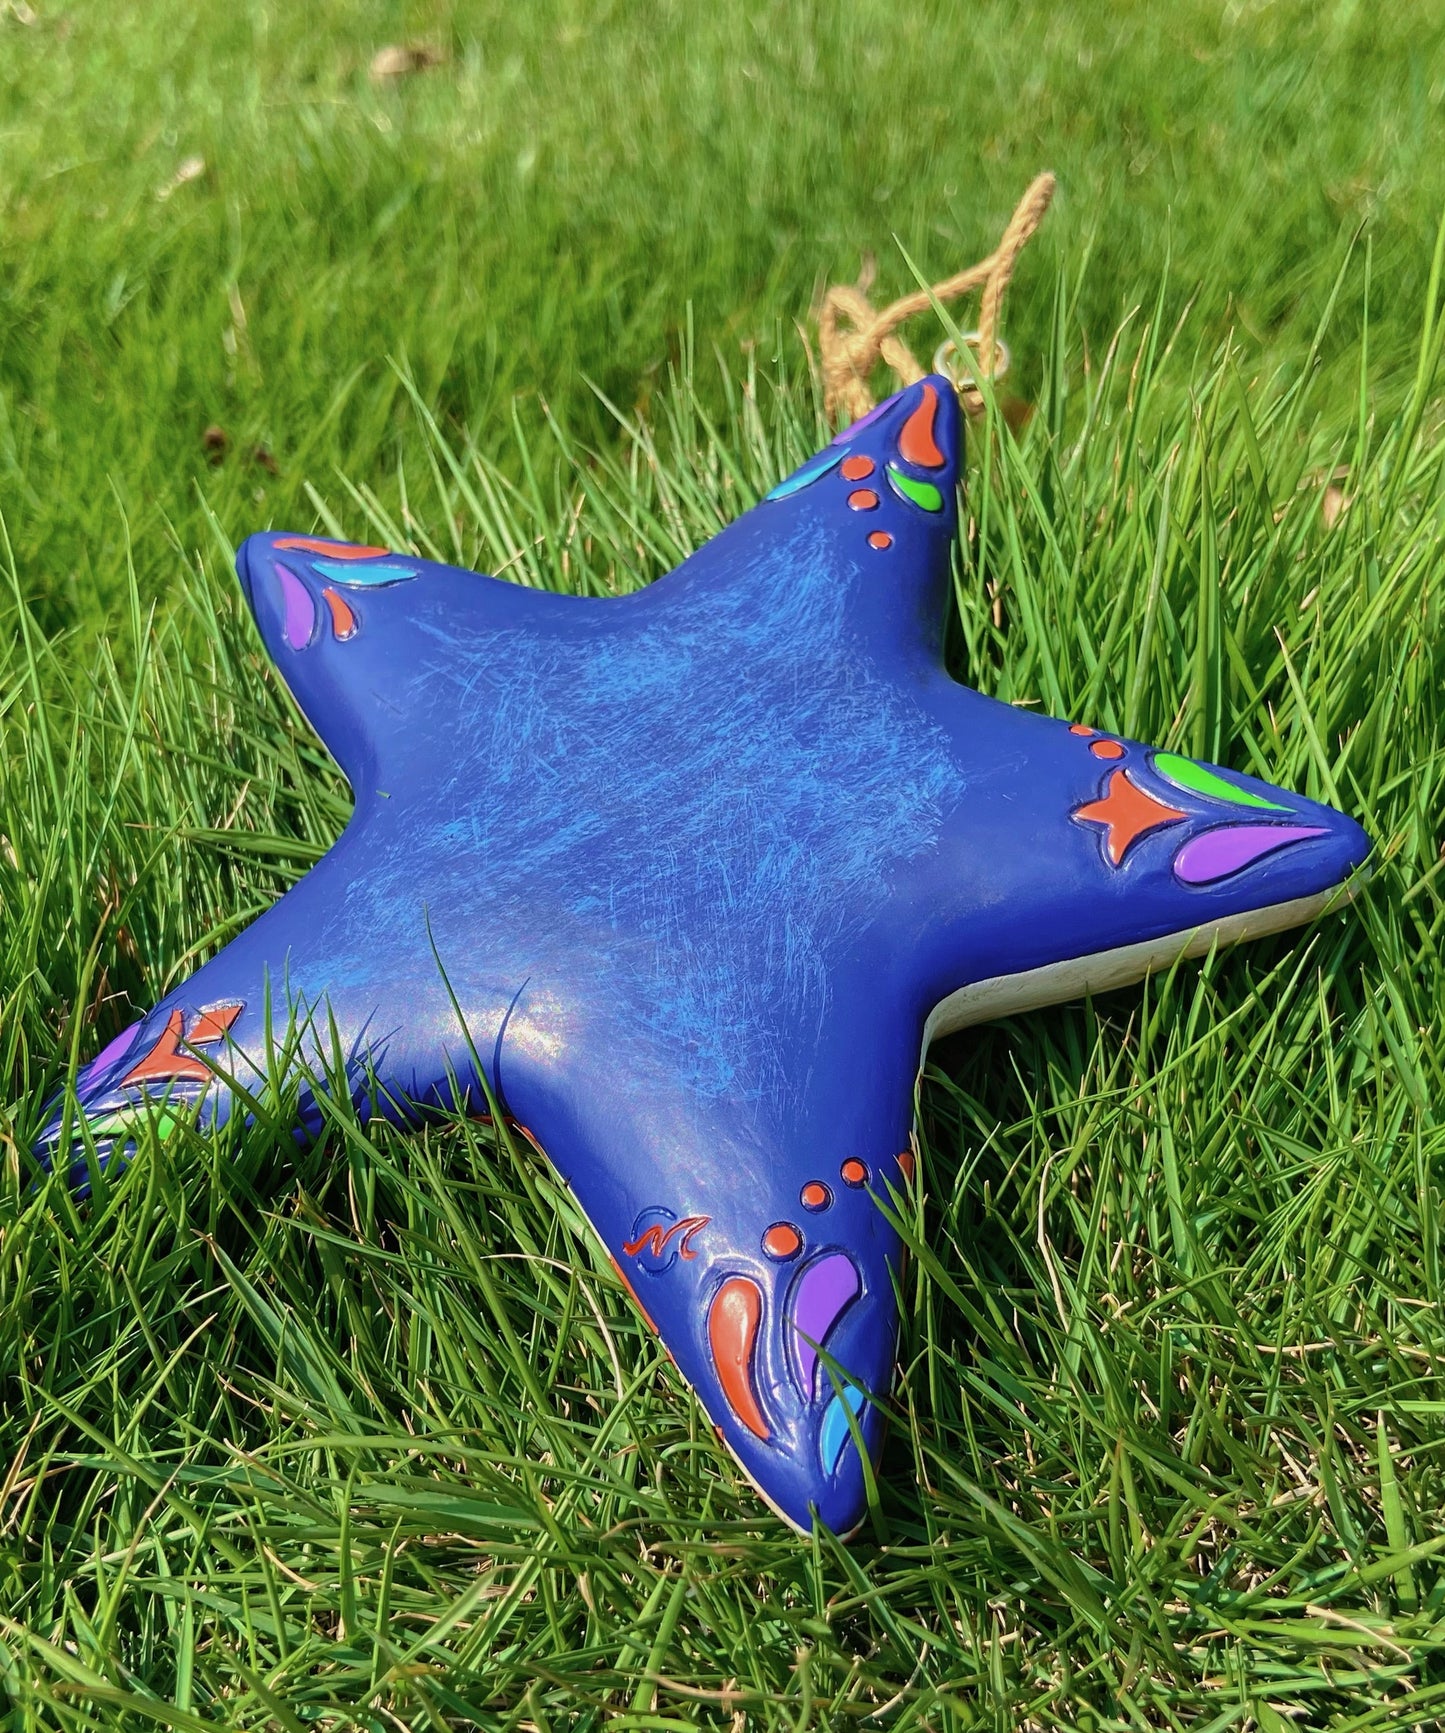 Heartwood Creek Nativity Star Stone Resin Hanging Ornament, 6”